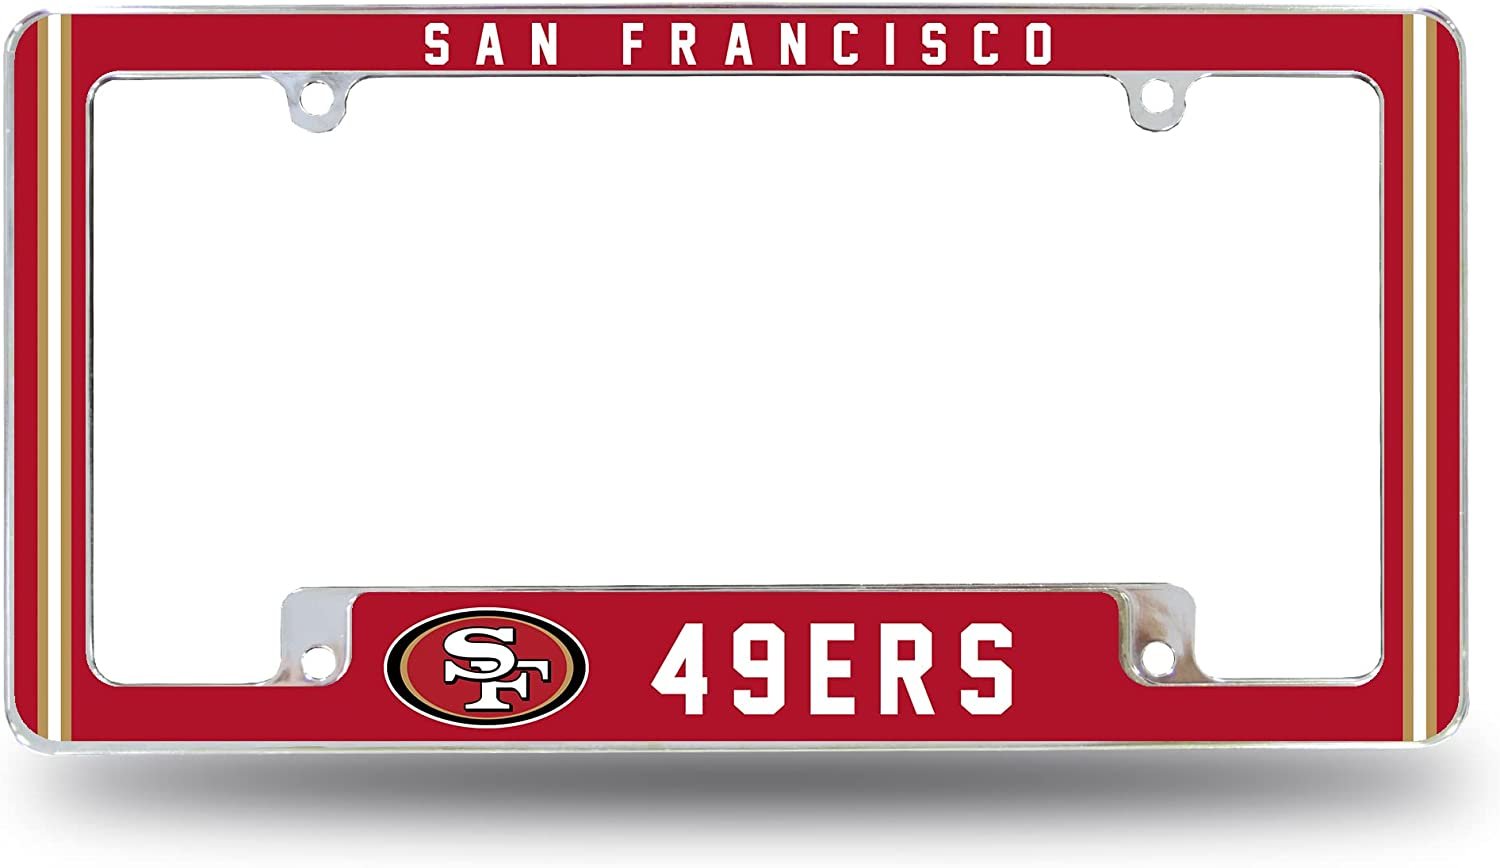 San Francisco 49ers Metal License Plate Frame Chrome Tag Cover Alternate Design 6x12 Inch